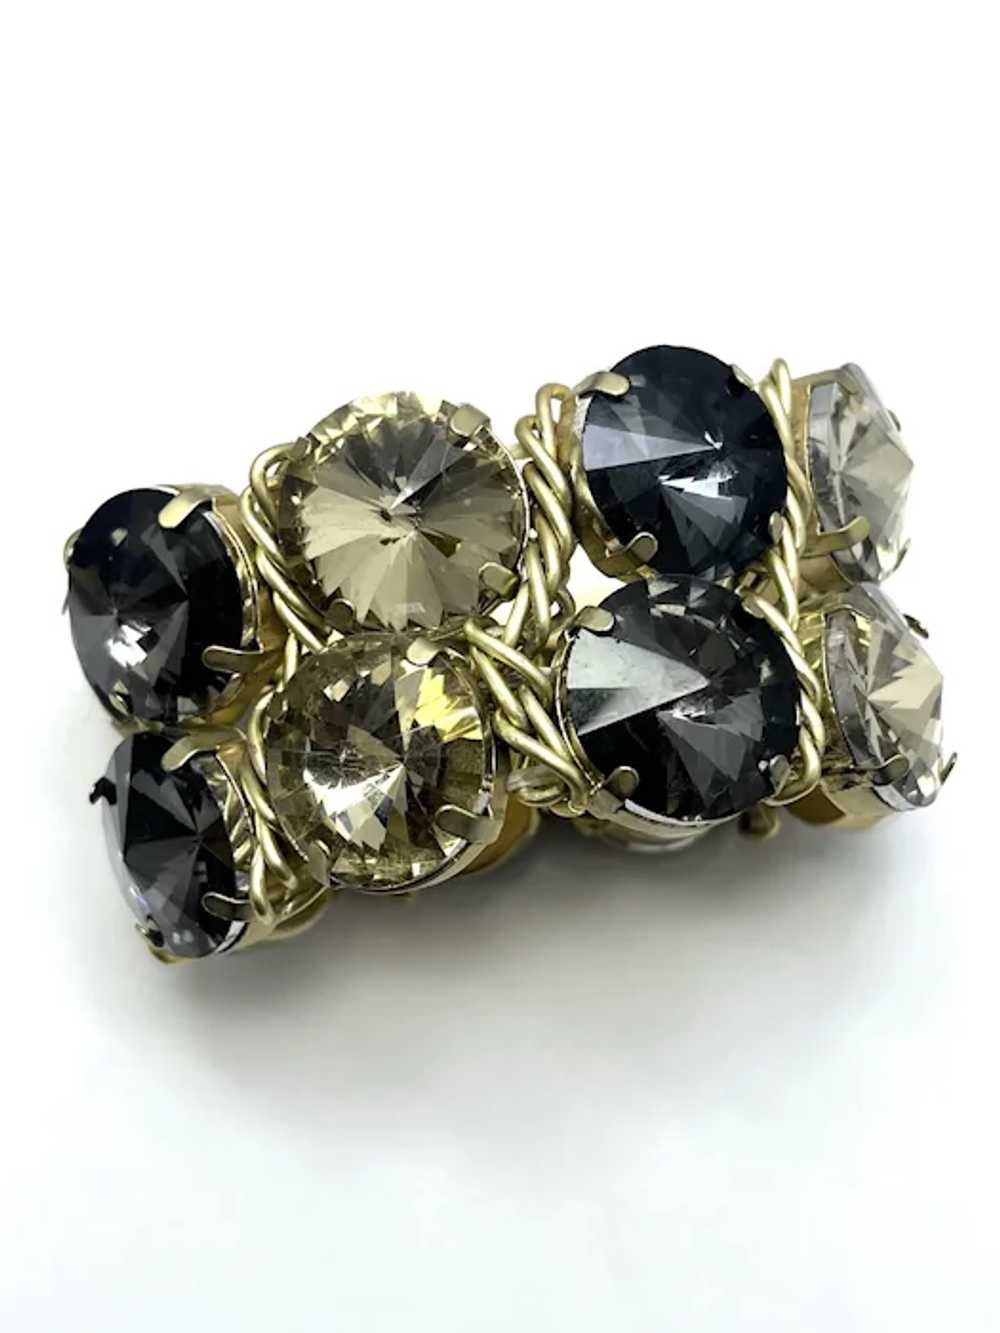 Vintage Rhinestone Jeweled Stretch Bracelet - image 2